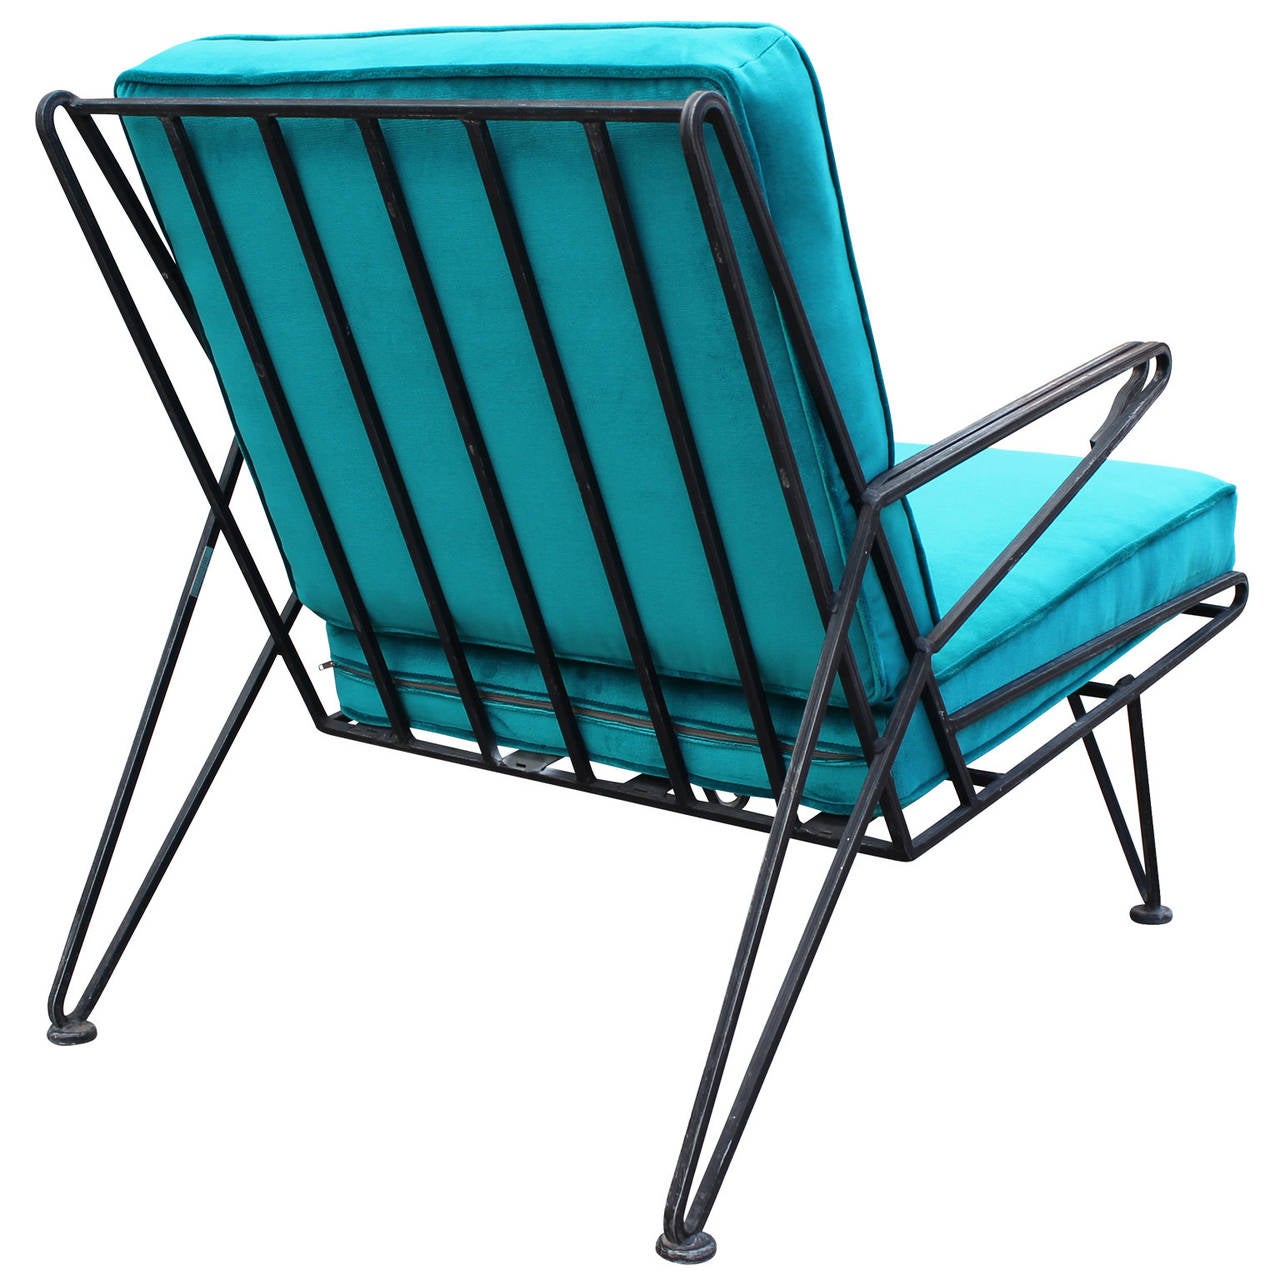 Phenomenal Pair of Teal Velvet Italian Style Mid-Century Modern Lounge Chairs 1